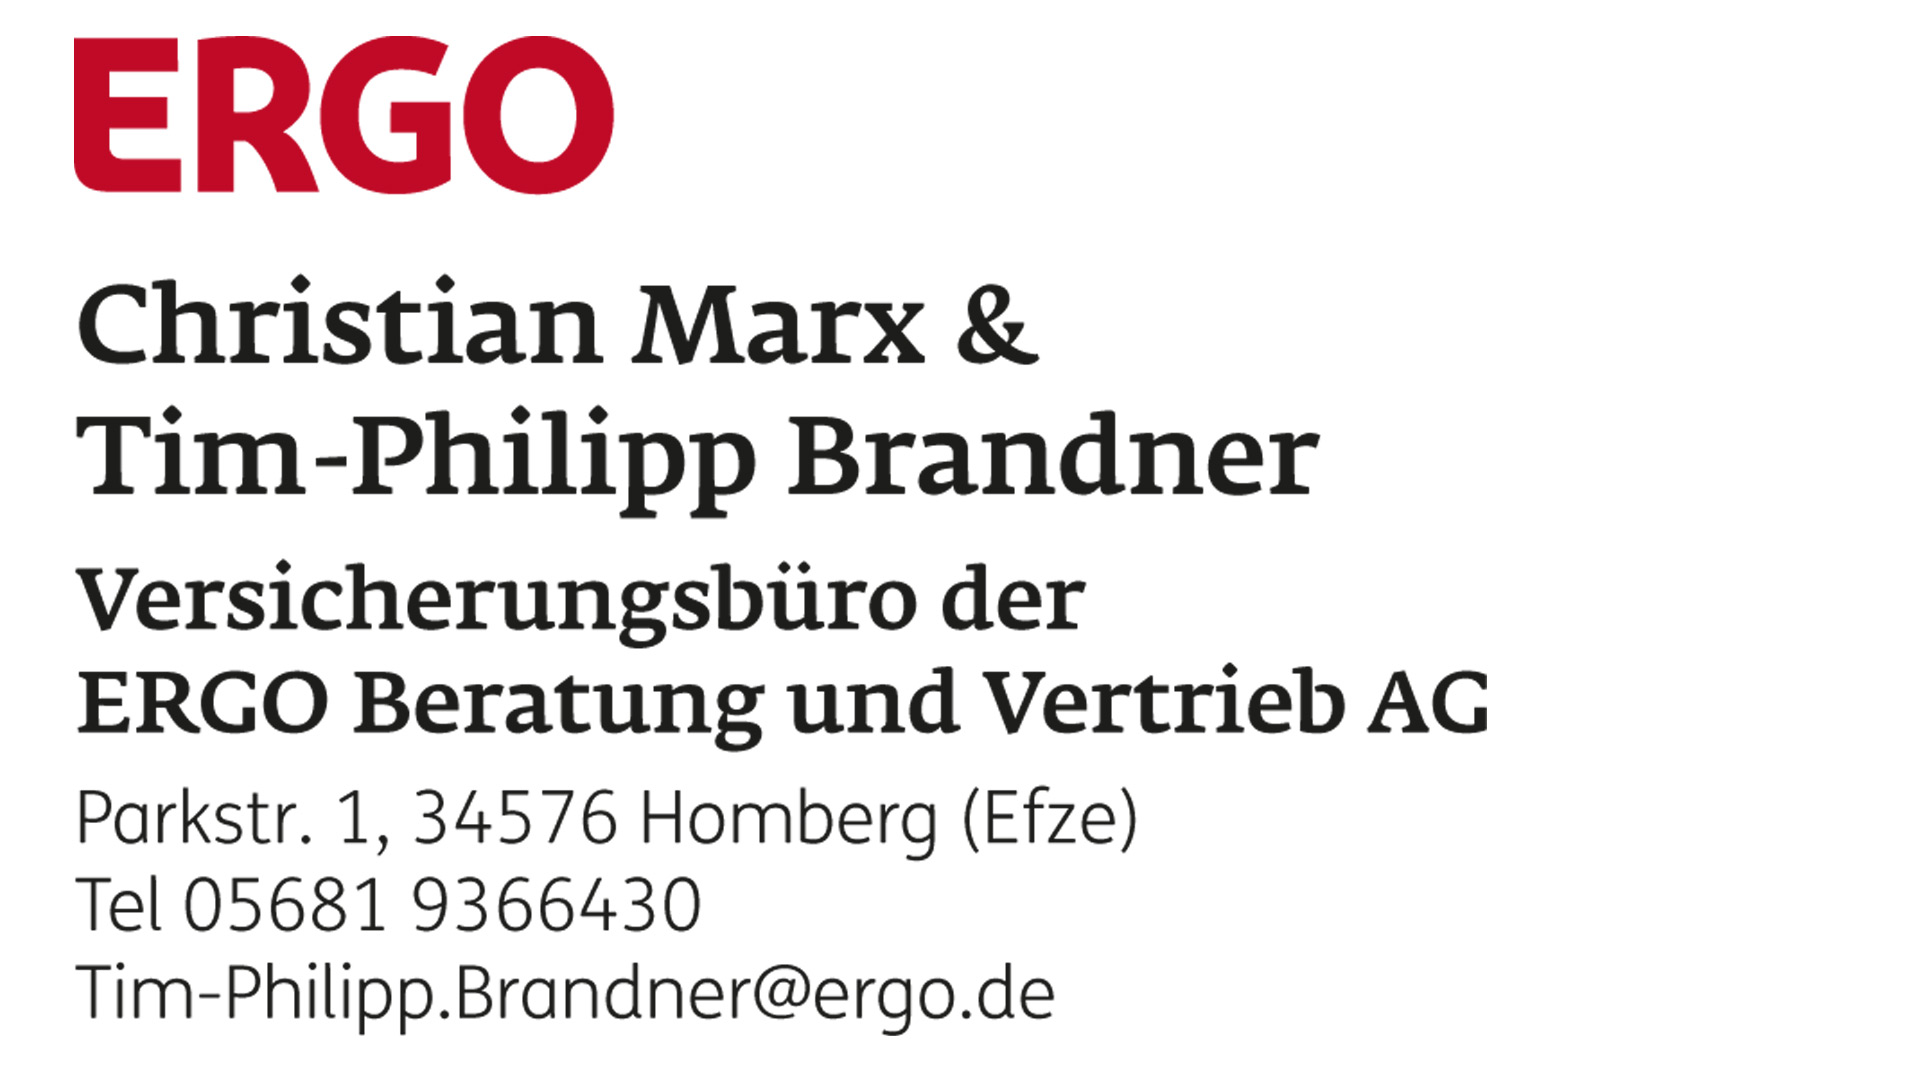 ERGO Beratung und Vertrieb AG - Subdirektion Christian Marx 